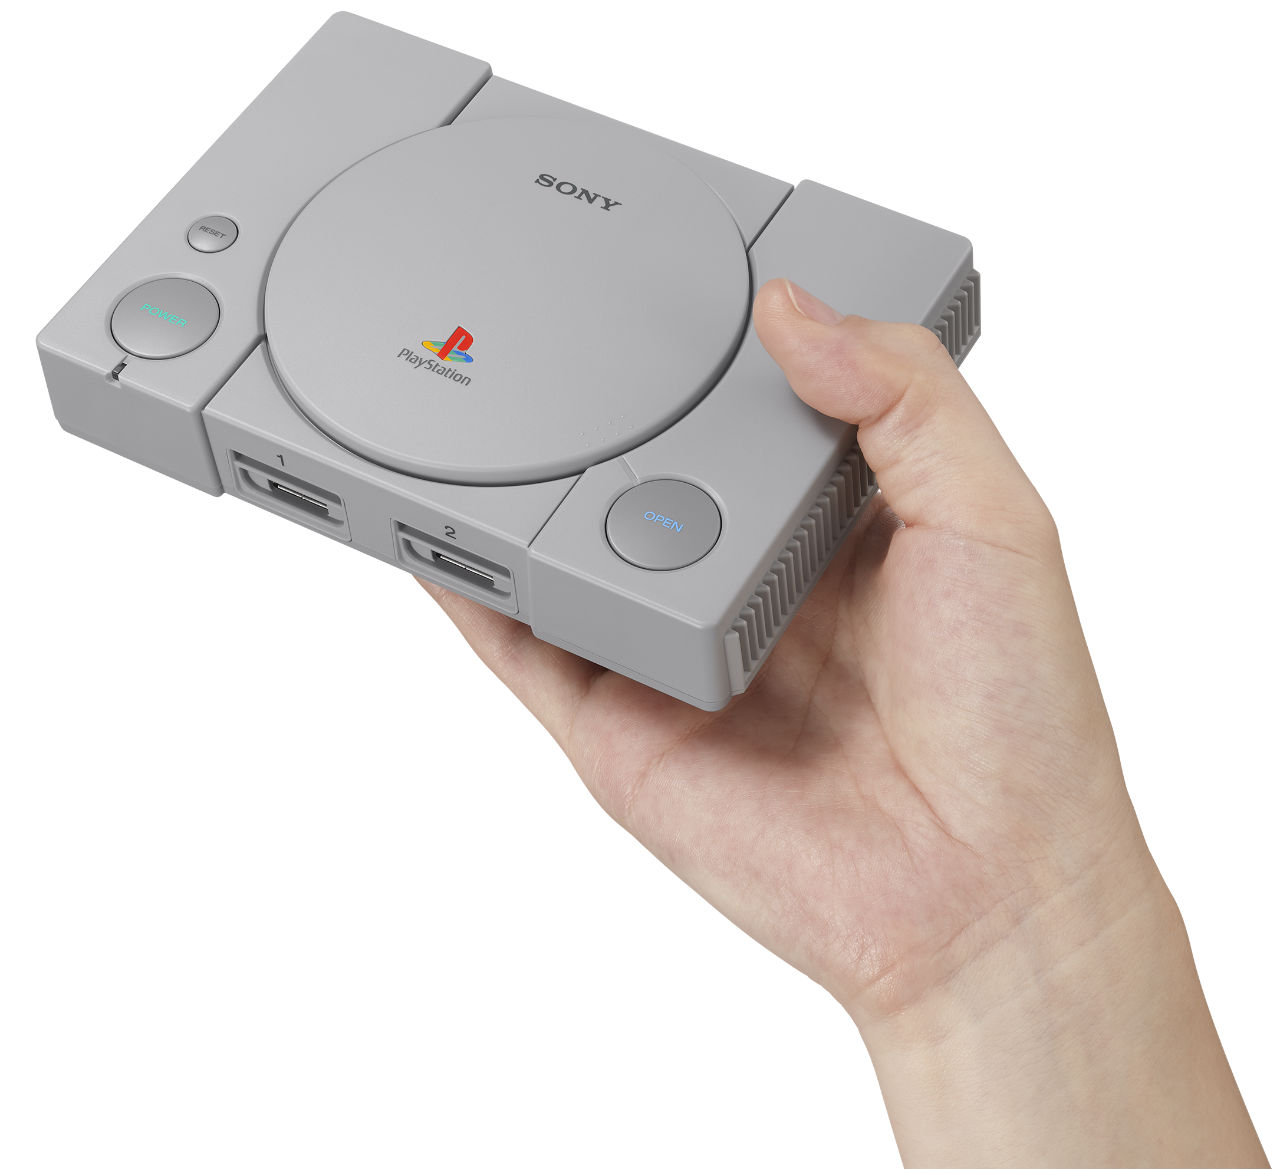 Сони объявила о скором прекращении производства PS Vita в Японии